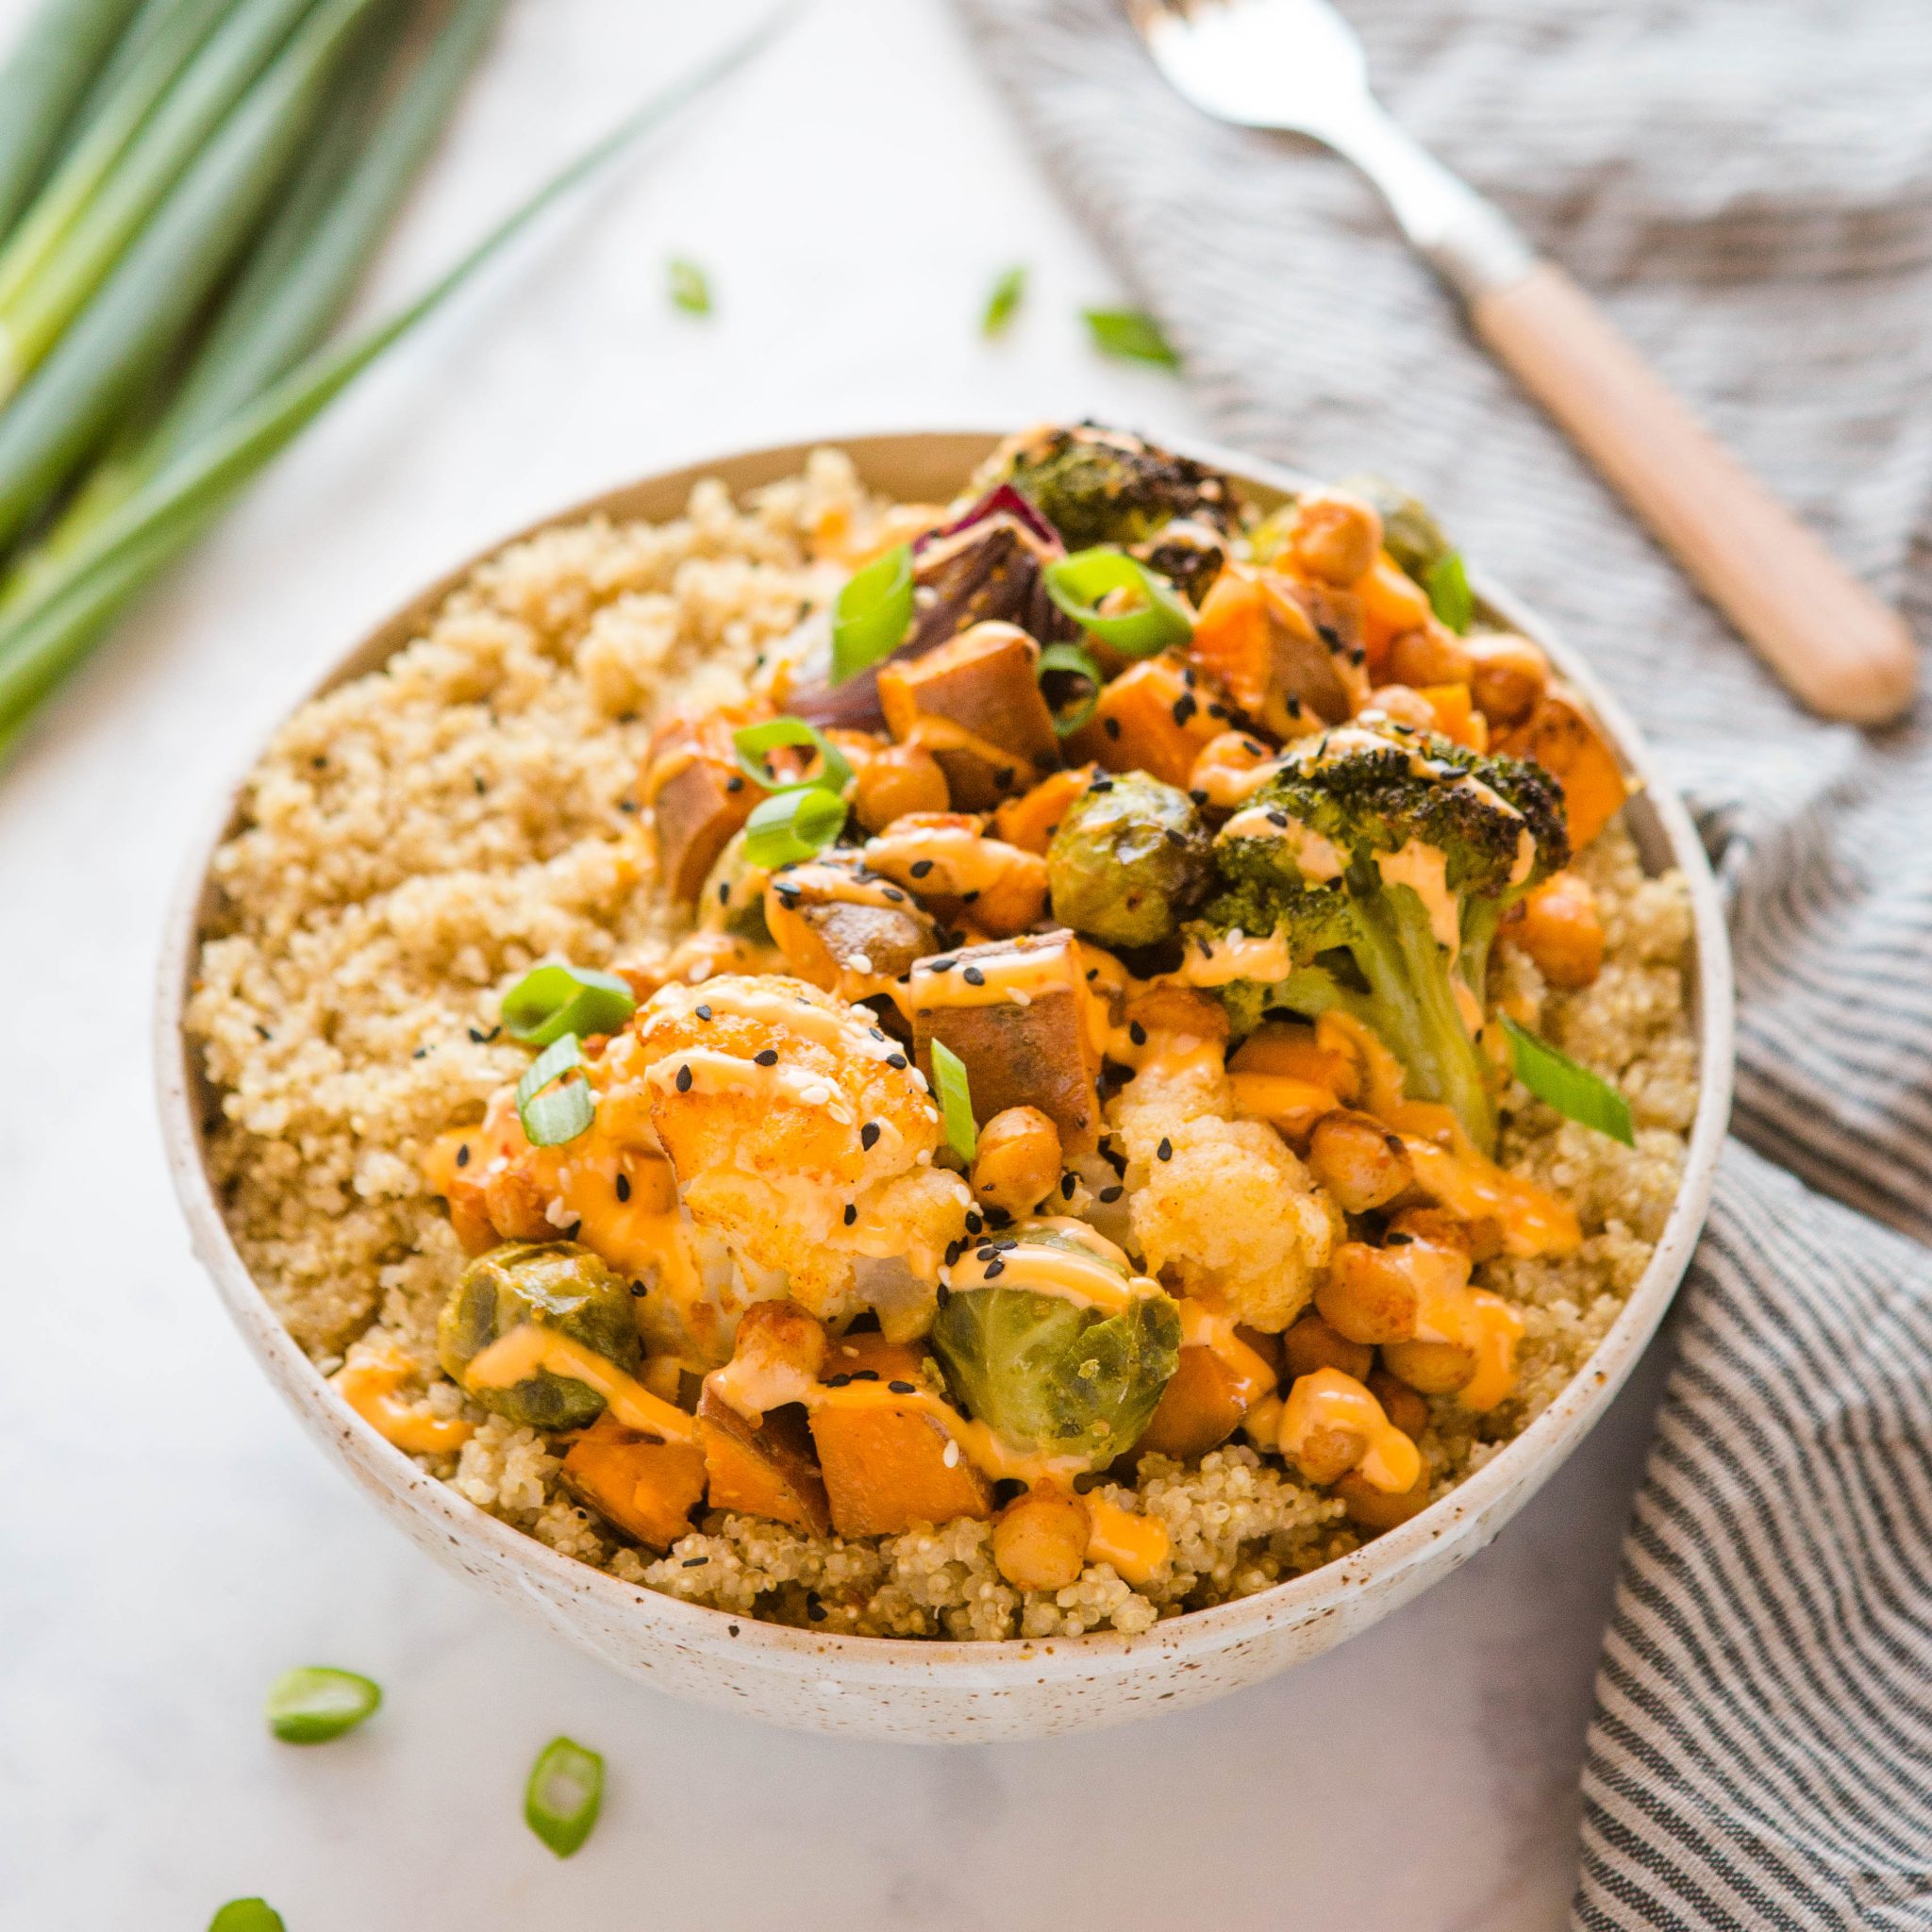 https://thebusybaker.ca/wp-content/uploads/2020/10/roasted-veggie-quinoa-bowls-fb-ig-2-scaled.jpg